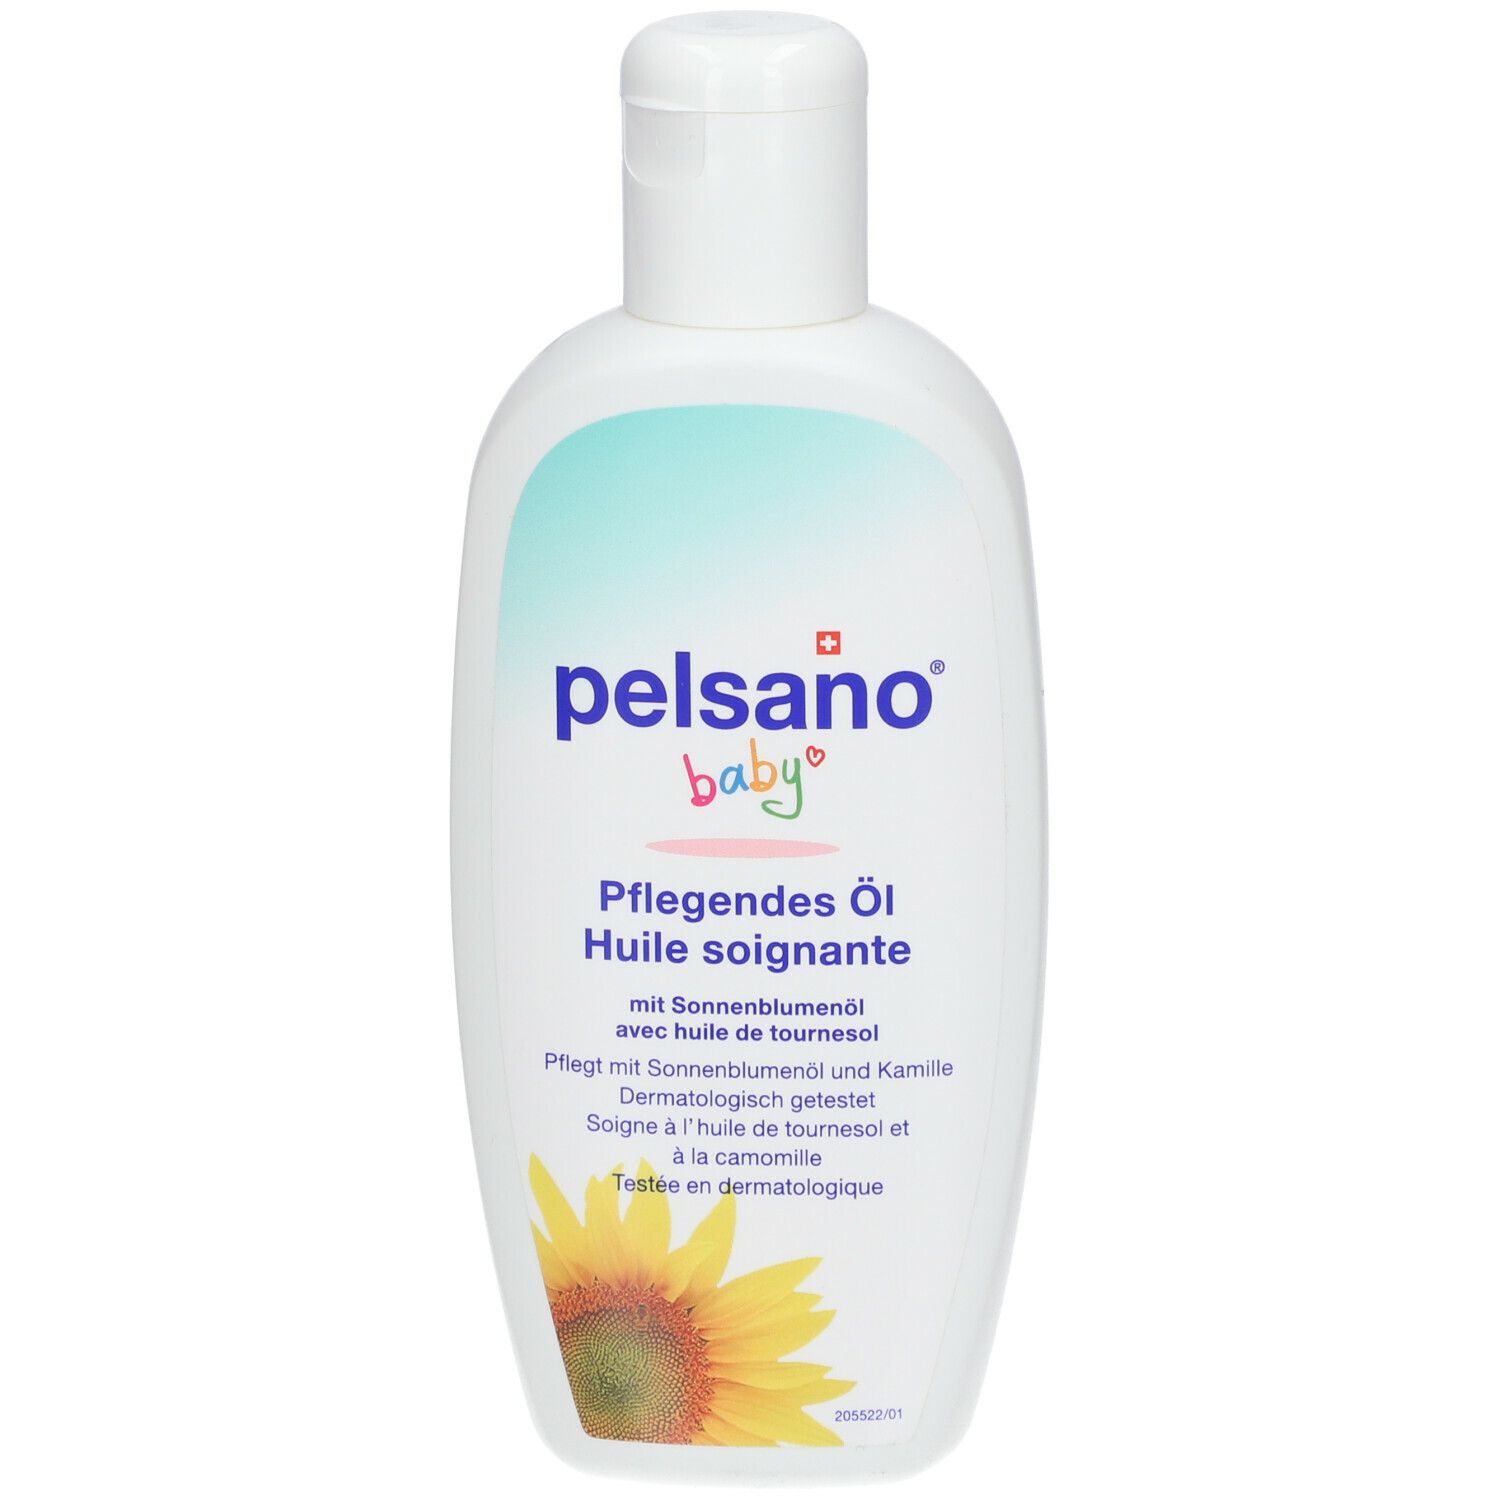 Image of Pelsano® Pflegendes Öl